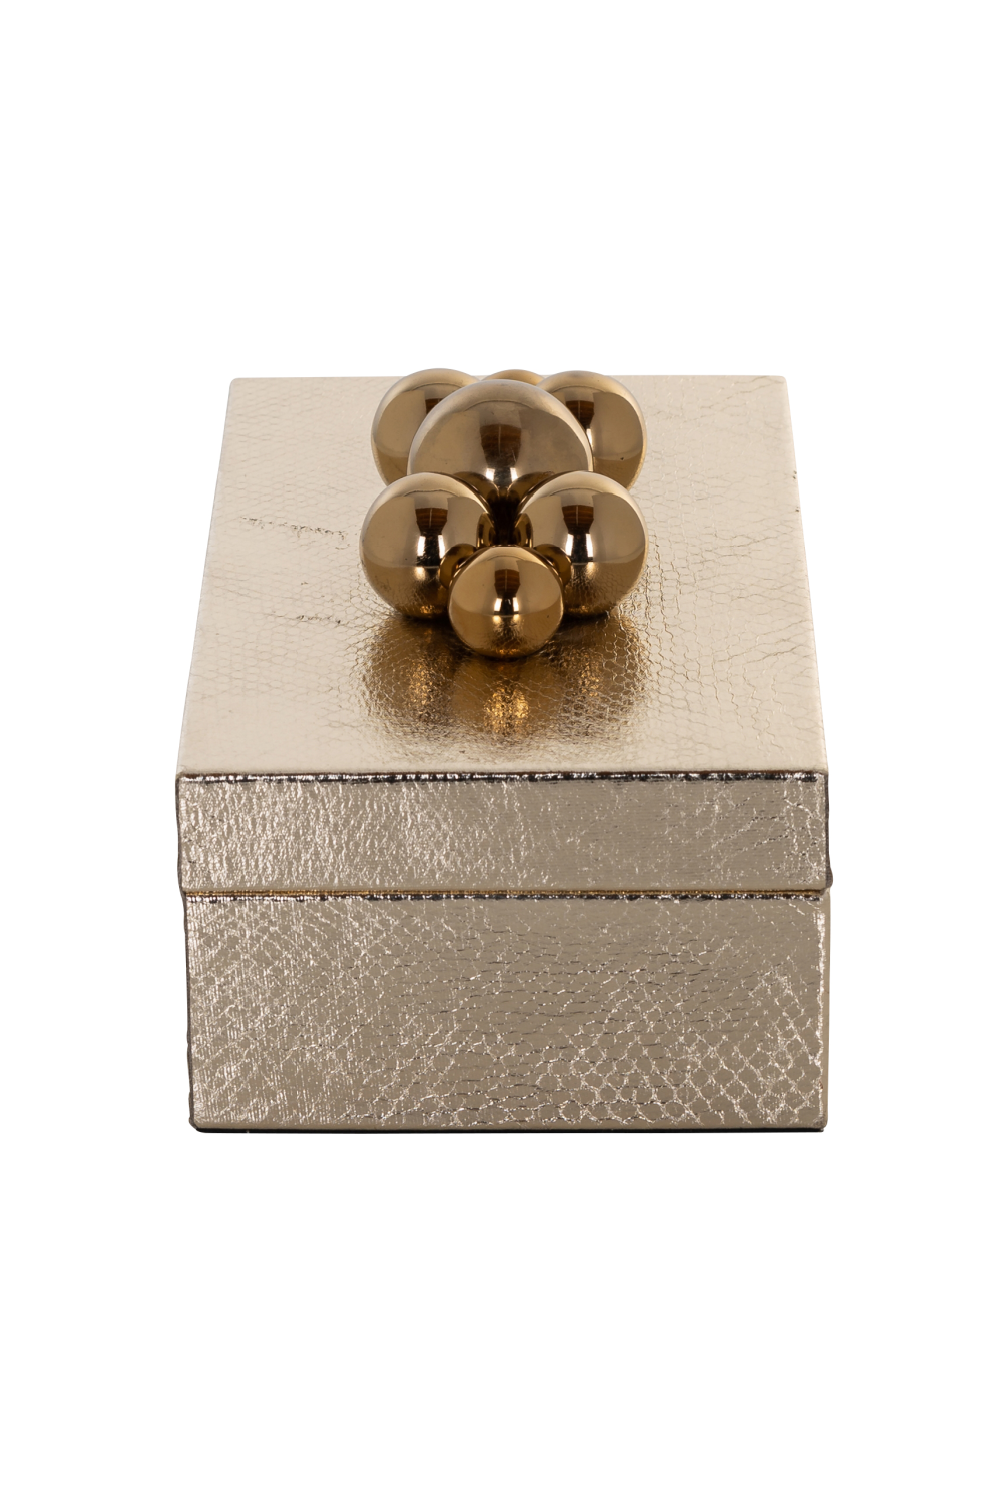 Gold Contemporary Storage Box | OROA Norah | OROA.com